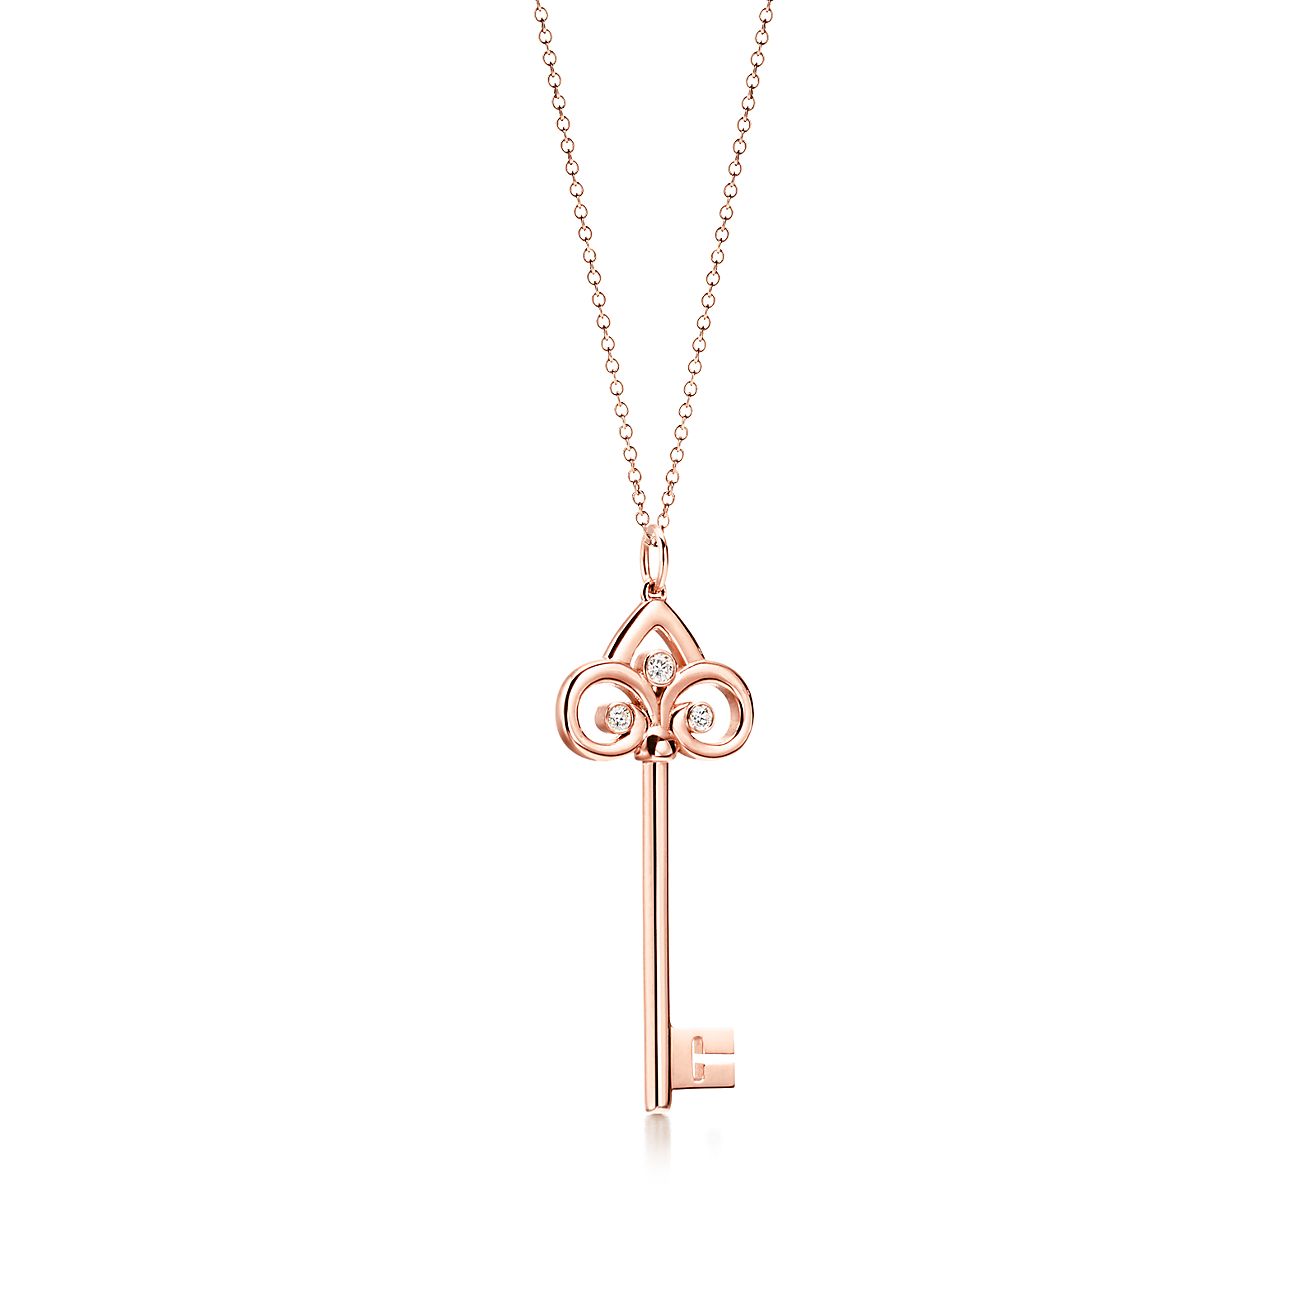 Tiffany Keys fleur de lis key pendant in 18k rose gold with